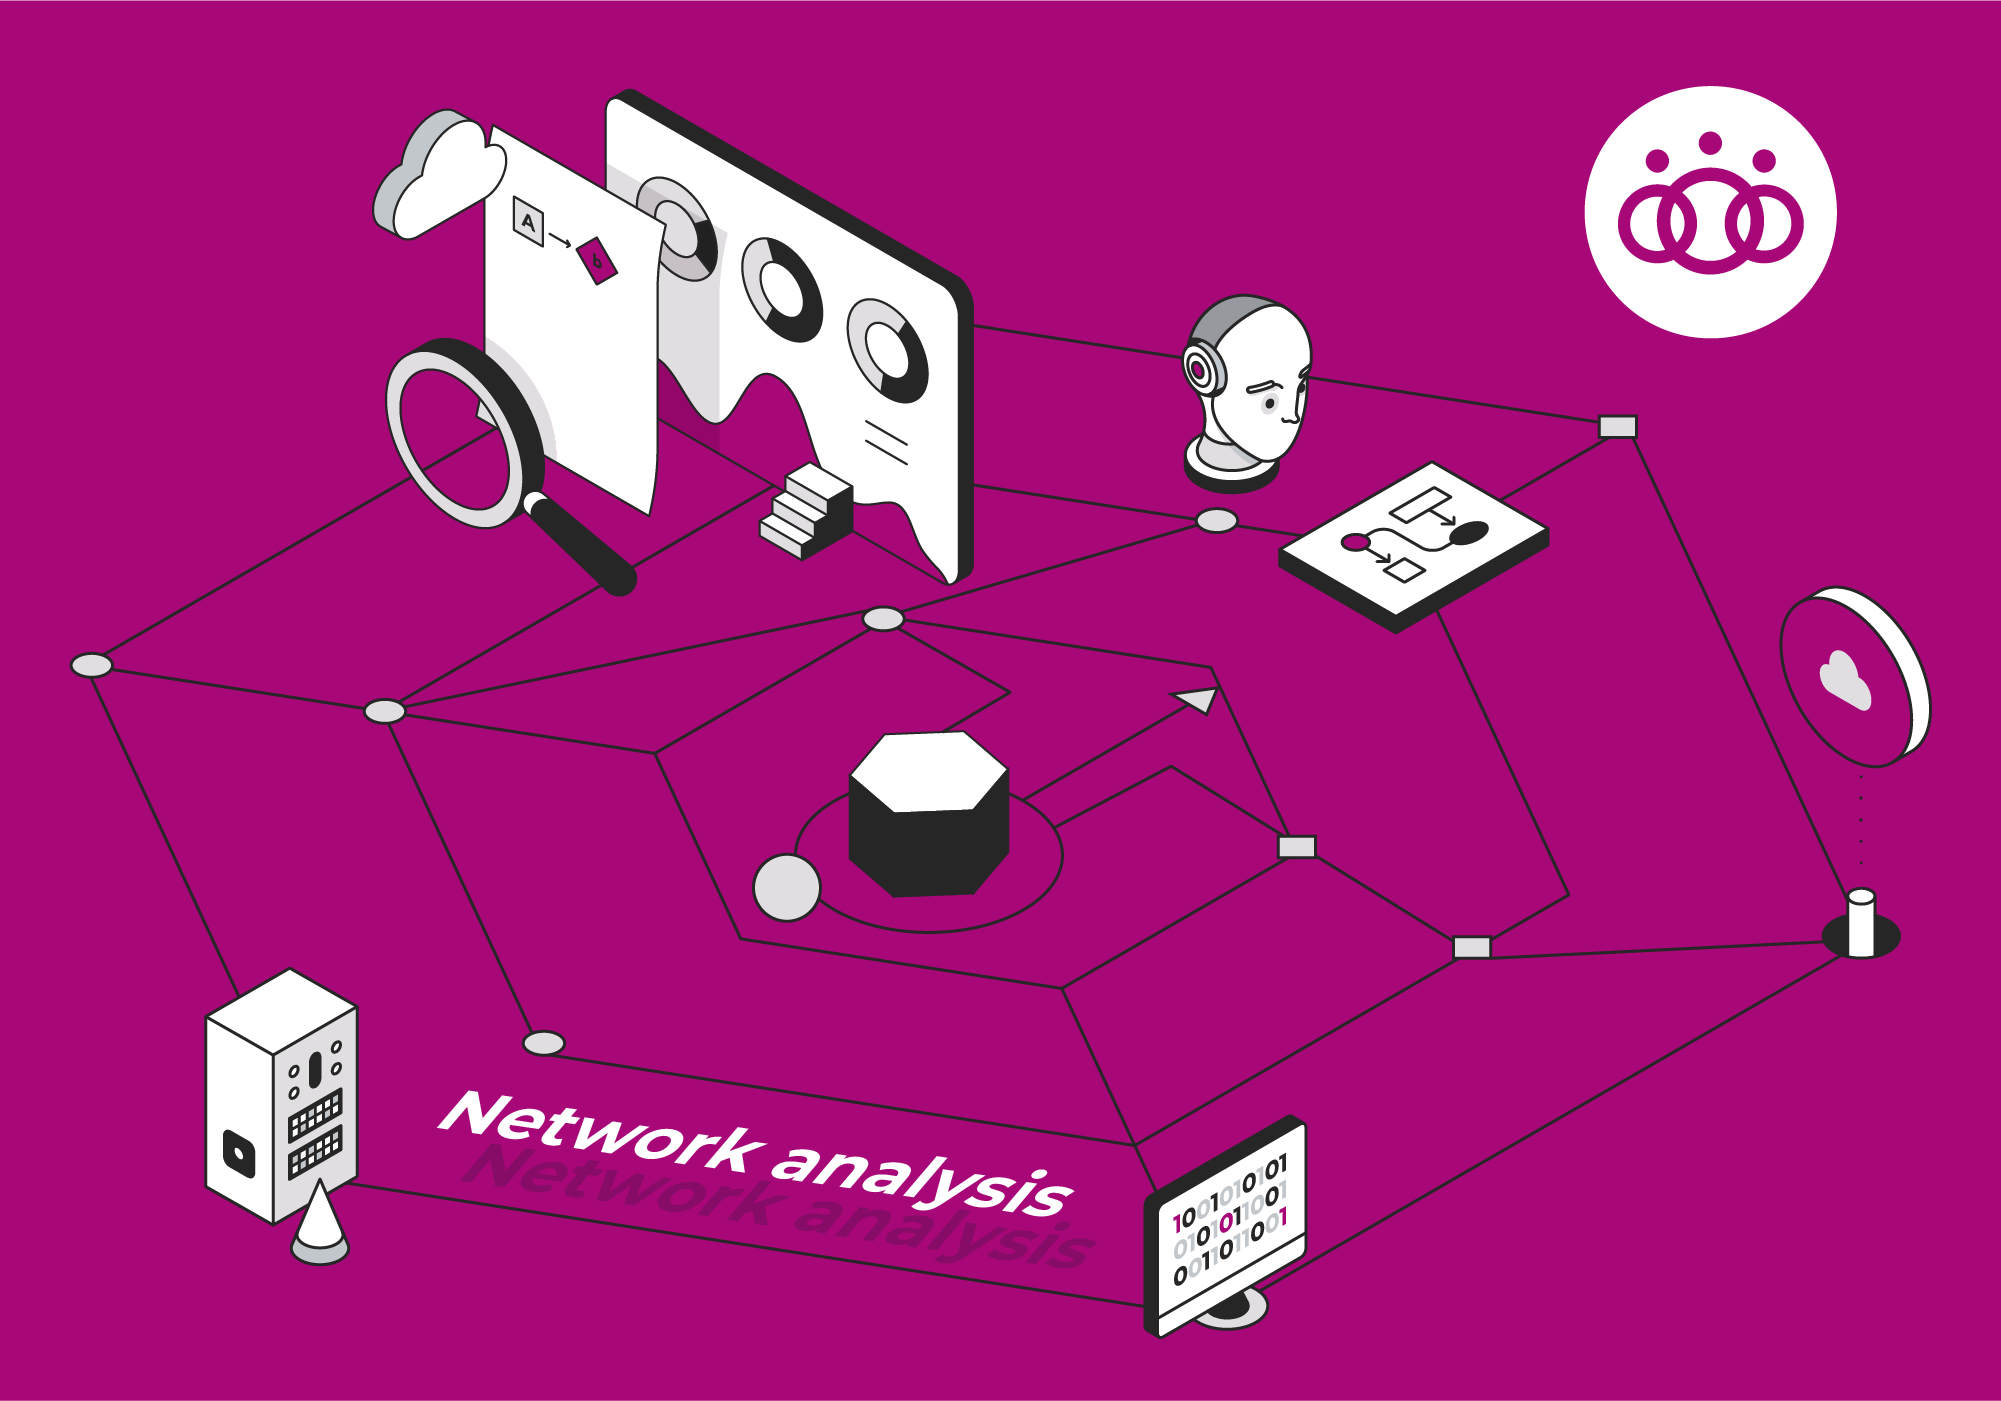 La Network Analysis in “Paghiamoci”